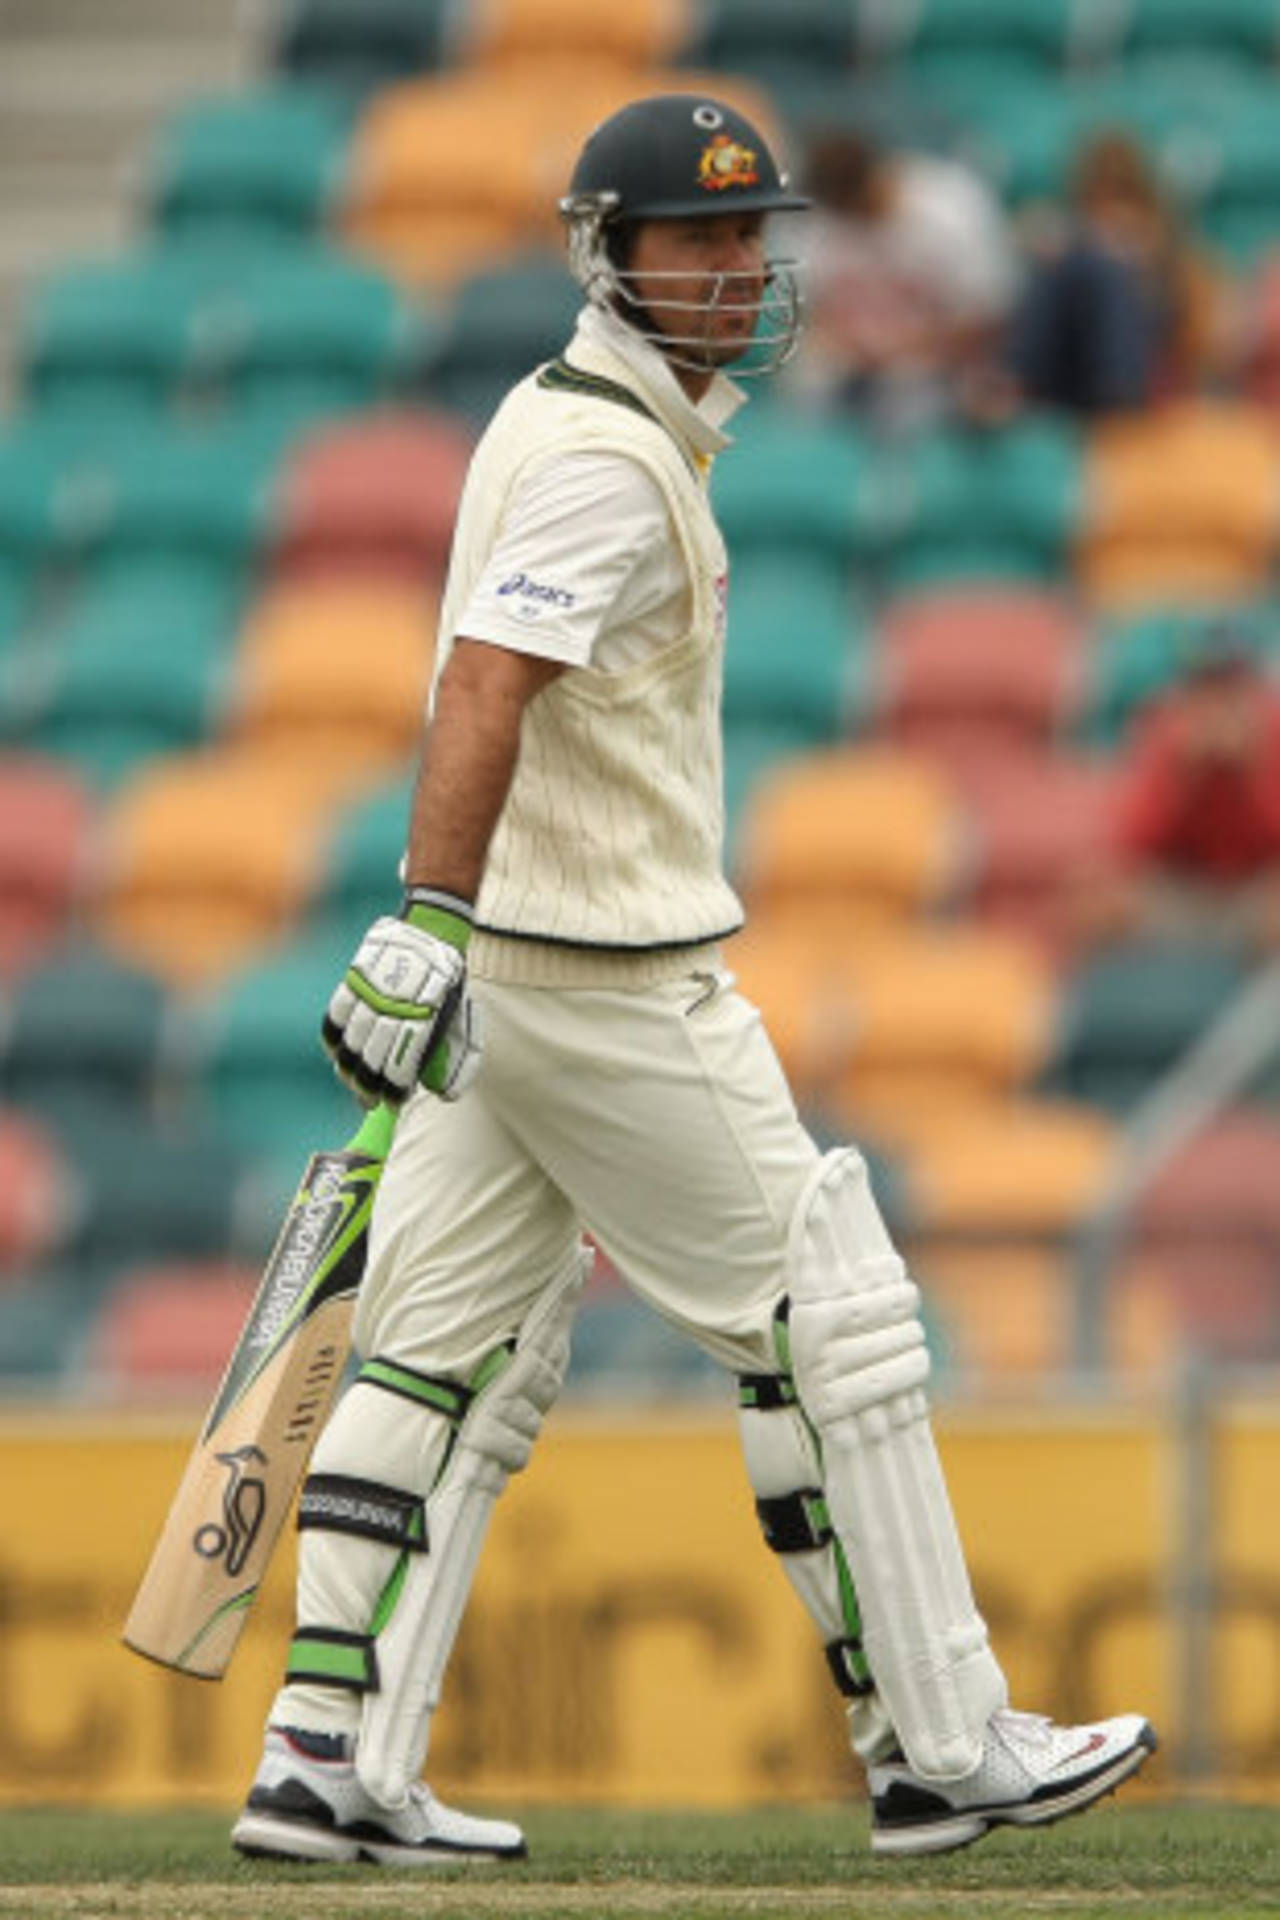 Ricky Ponting walks off for 16, Australia v New Zealand, 2nd Test, Hobart, 4th day, December 12 2011